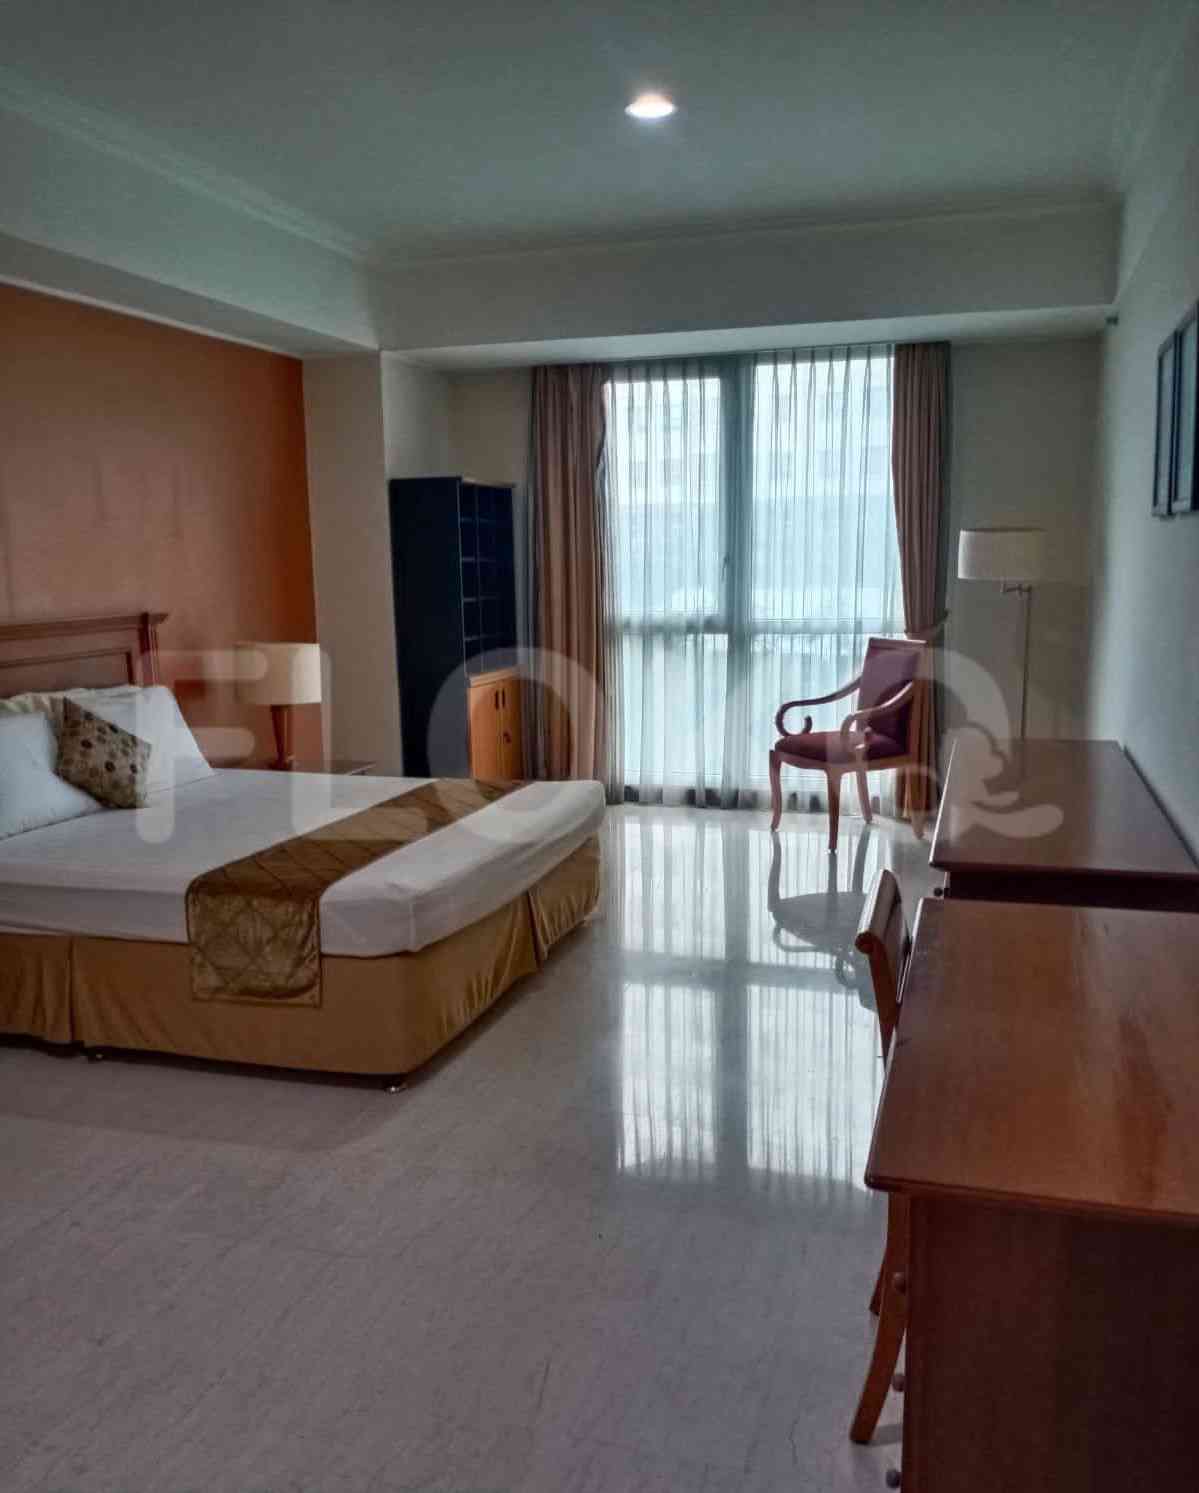 3 Bedroom on 2nd Floor for Rent in Casablanca Apartment - fte11b 1